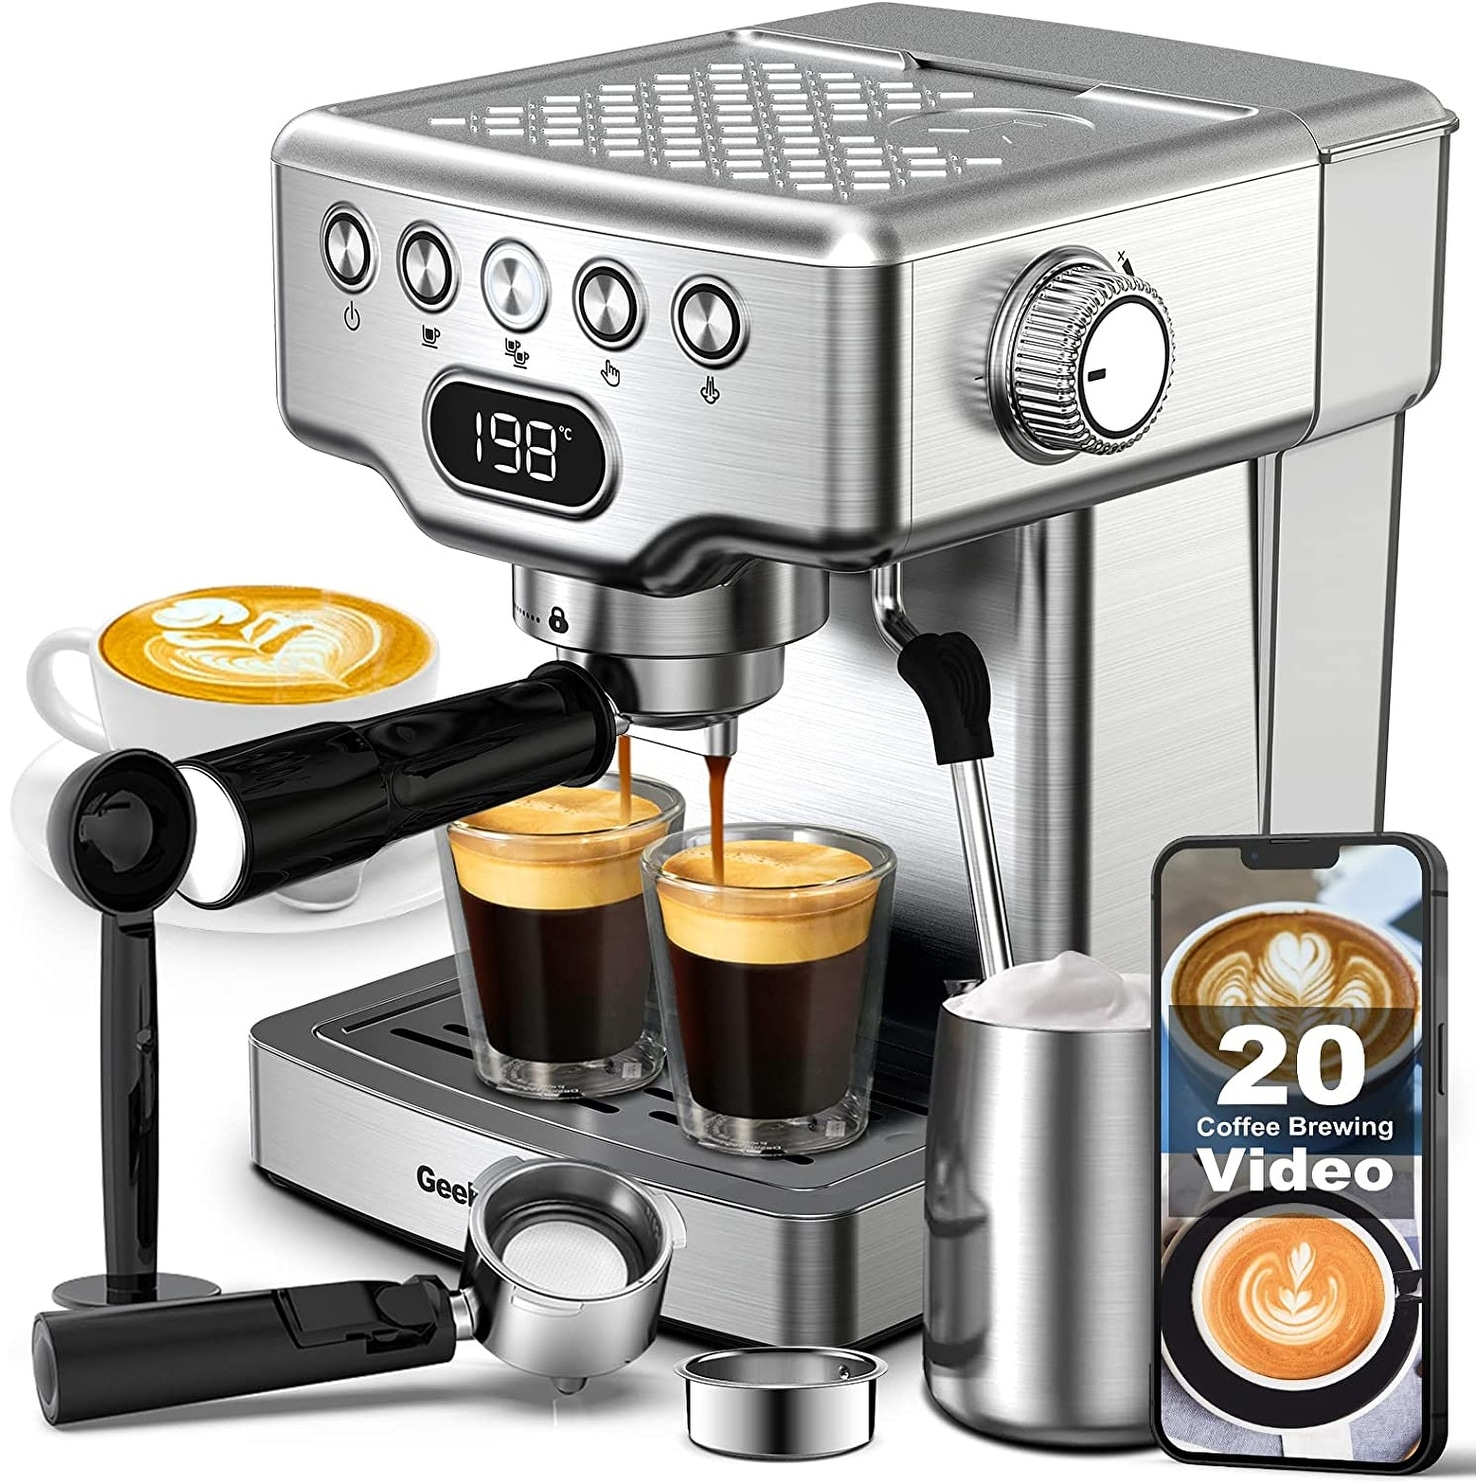 Brentwood GA-125 20 oz New Espresso and Cappuccino Maker, Black 